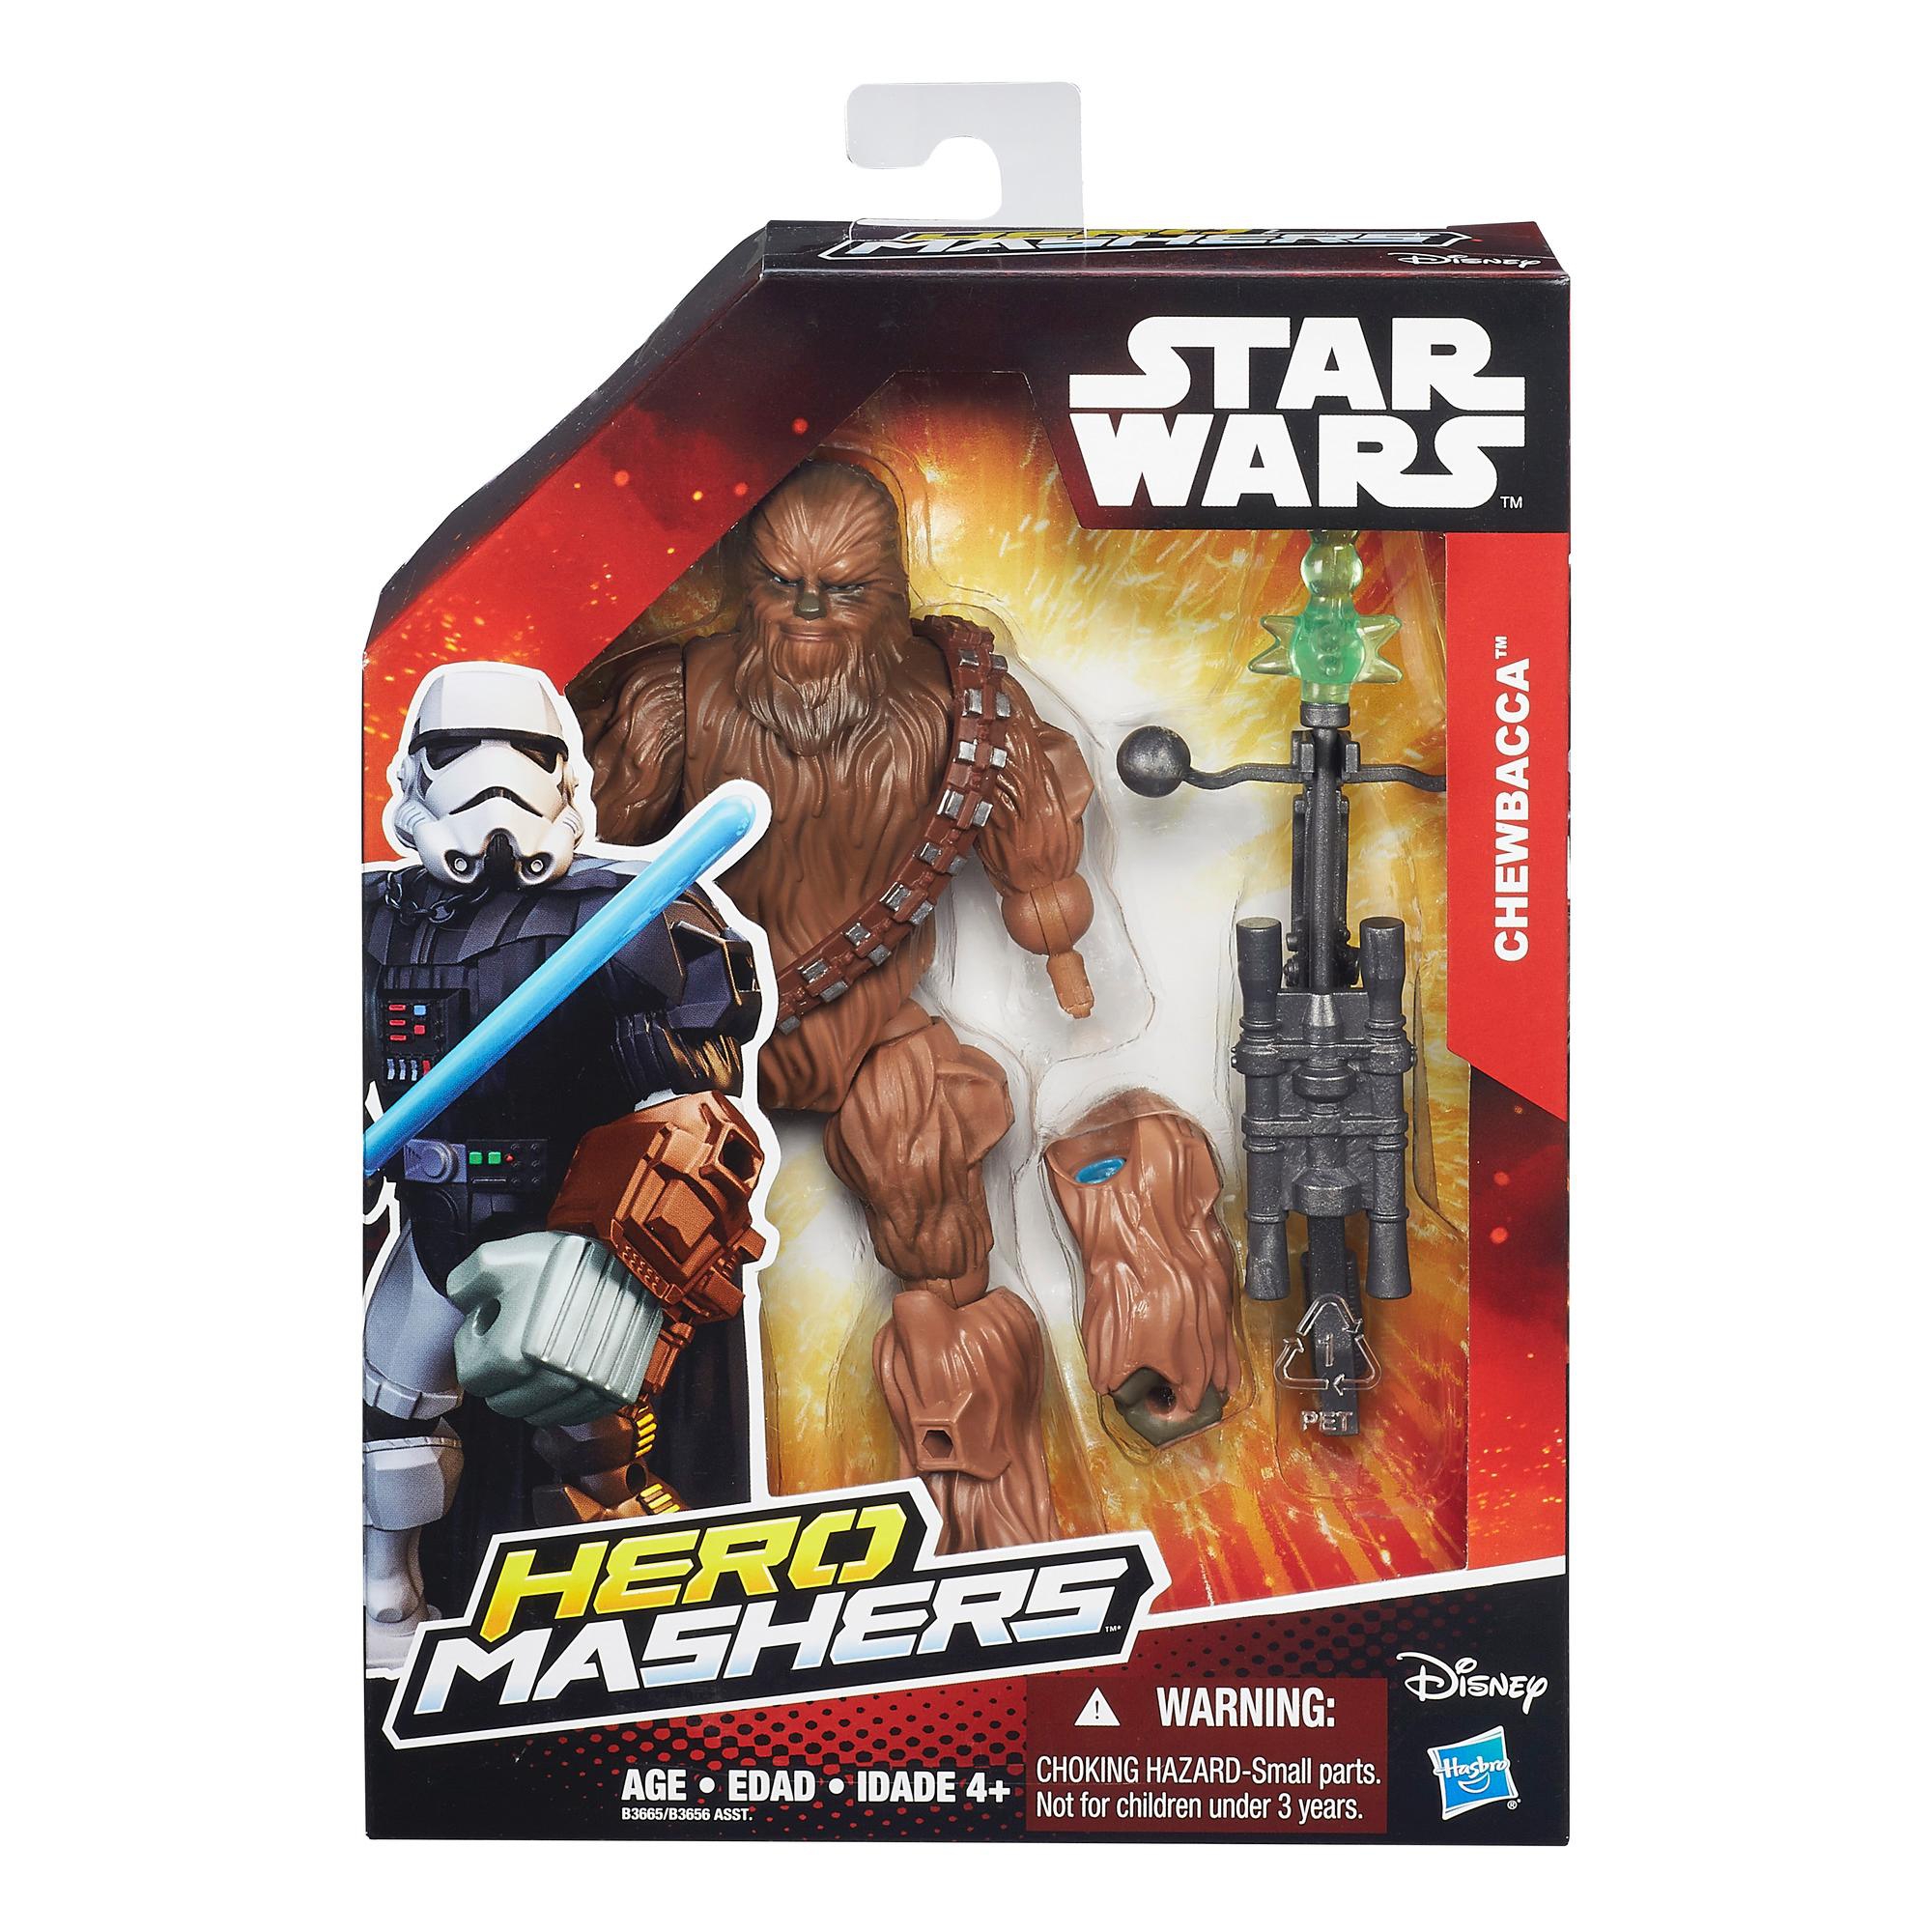 Disney Star Wars 'Chewbacca' Hero Mashers 6 inch Figure Toy